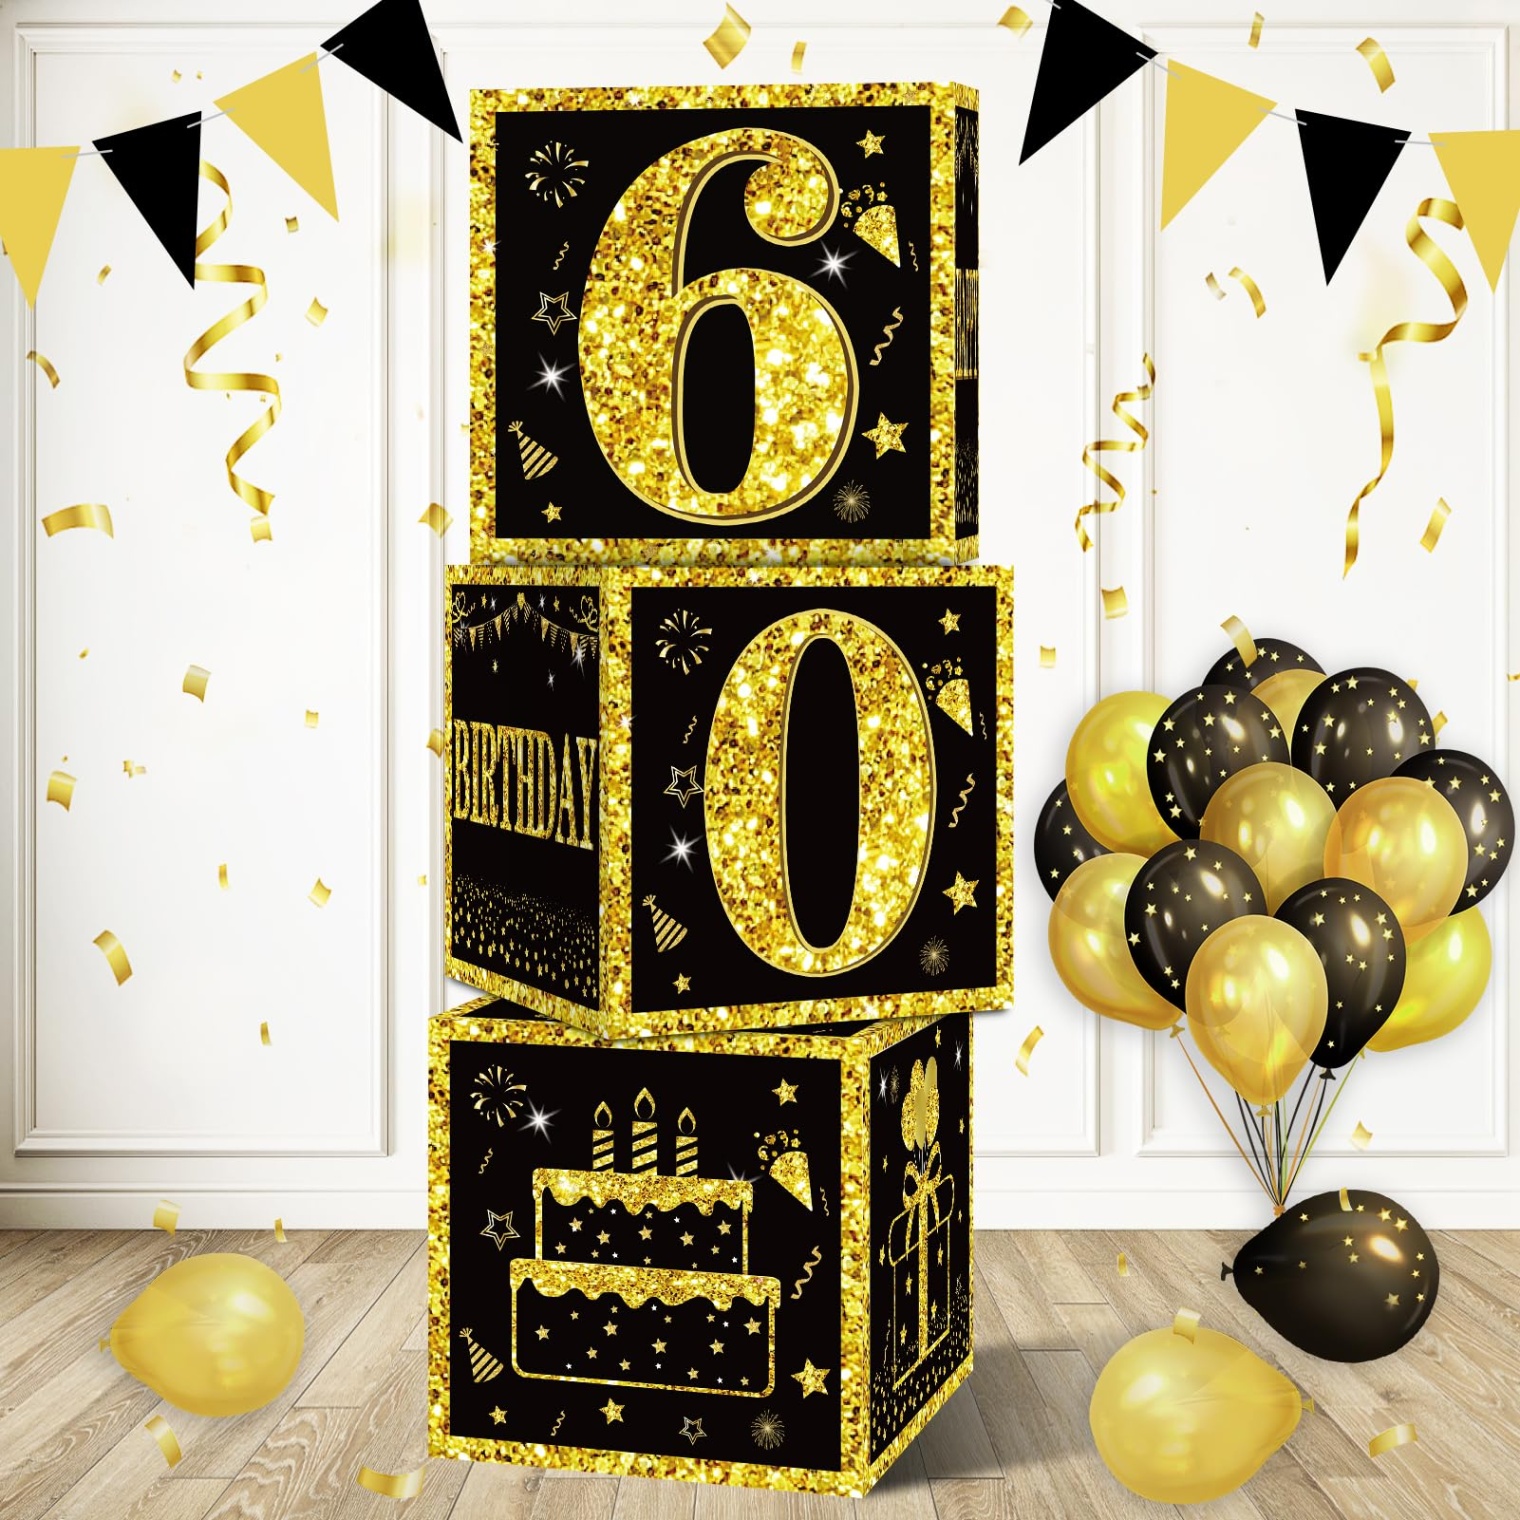 60th birthday decoration ideas Niche Utama Home pcs th Birthday Decorations Boxes for Men Women, Black Gold Happy   Birthday Balloons Boxes Party Supplies,  Year Old Bday Theme Cardboard  Box